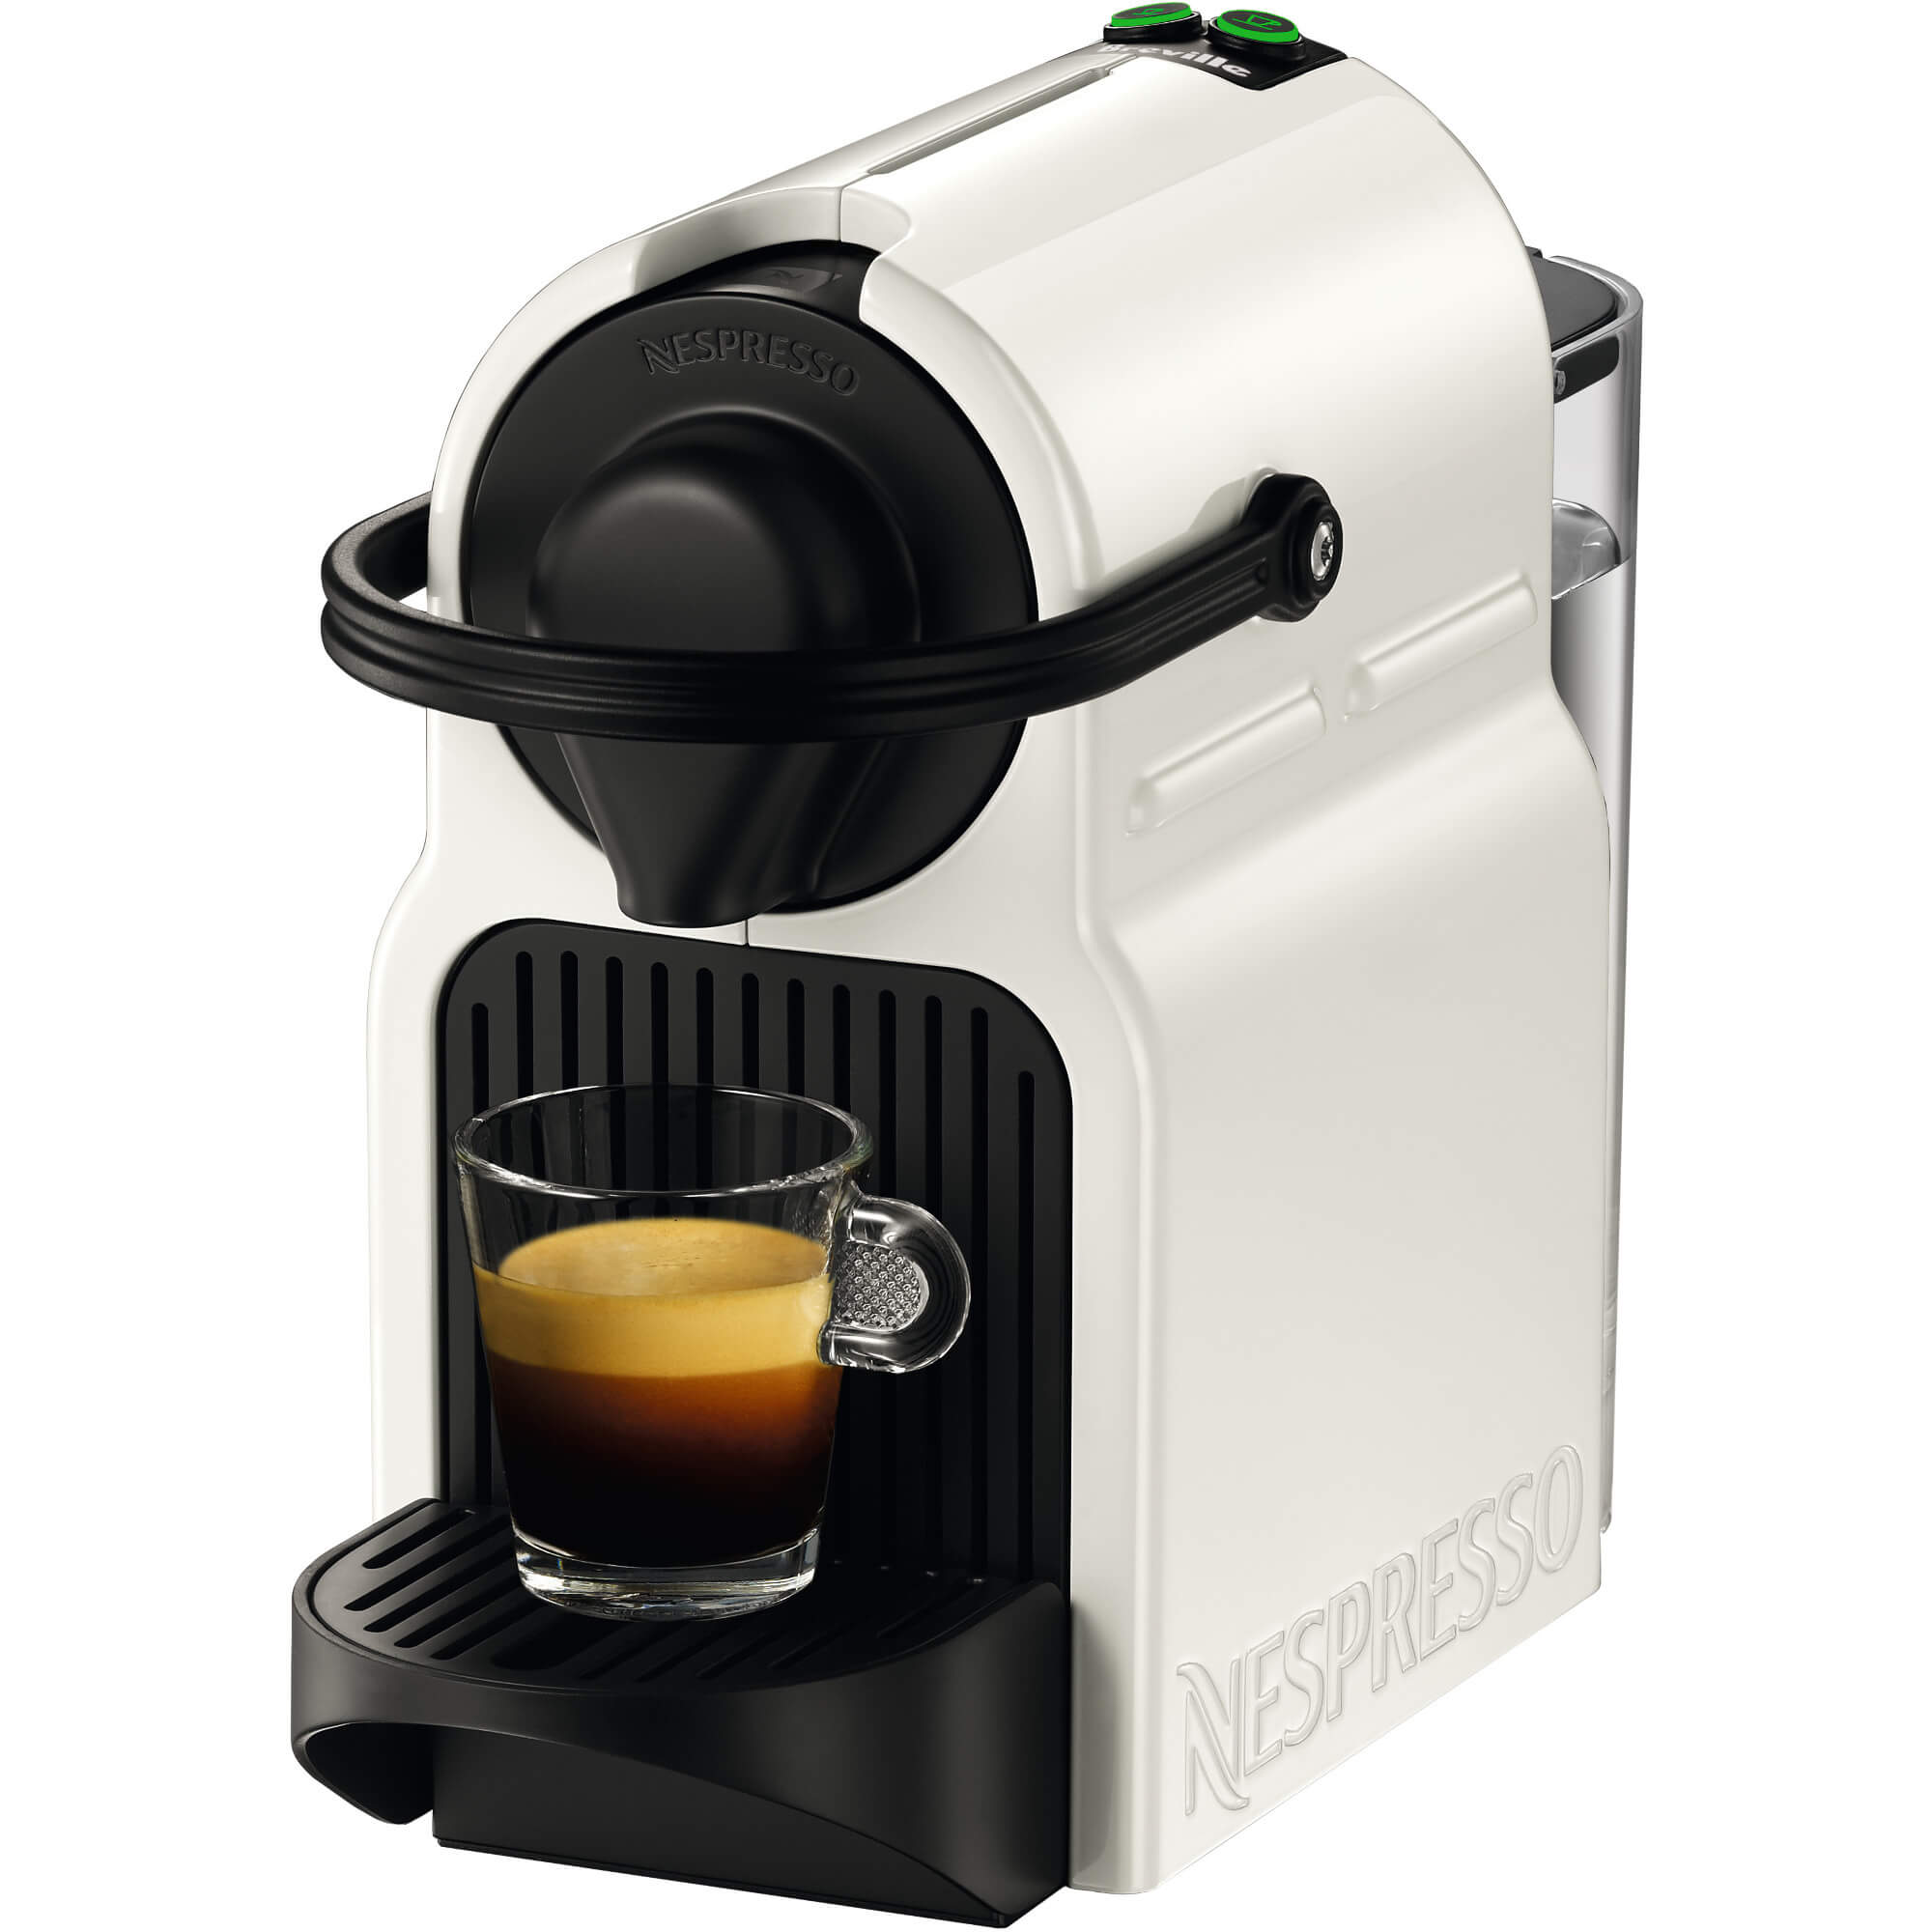  Espressor Nespresso Inissia C40, 1260 W, 0.7 L, 19 bar, Alb 